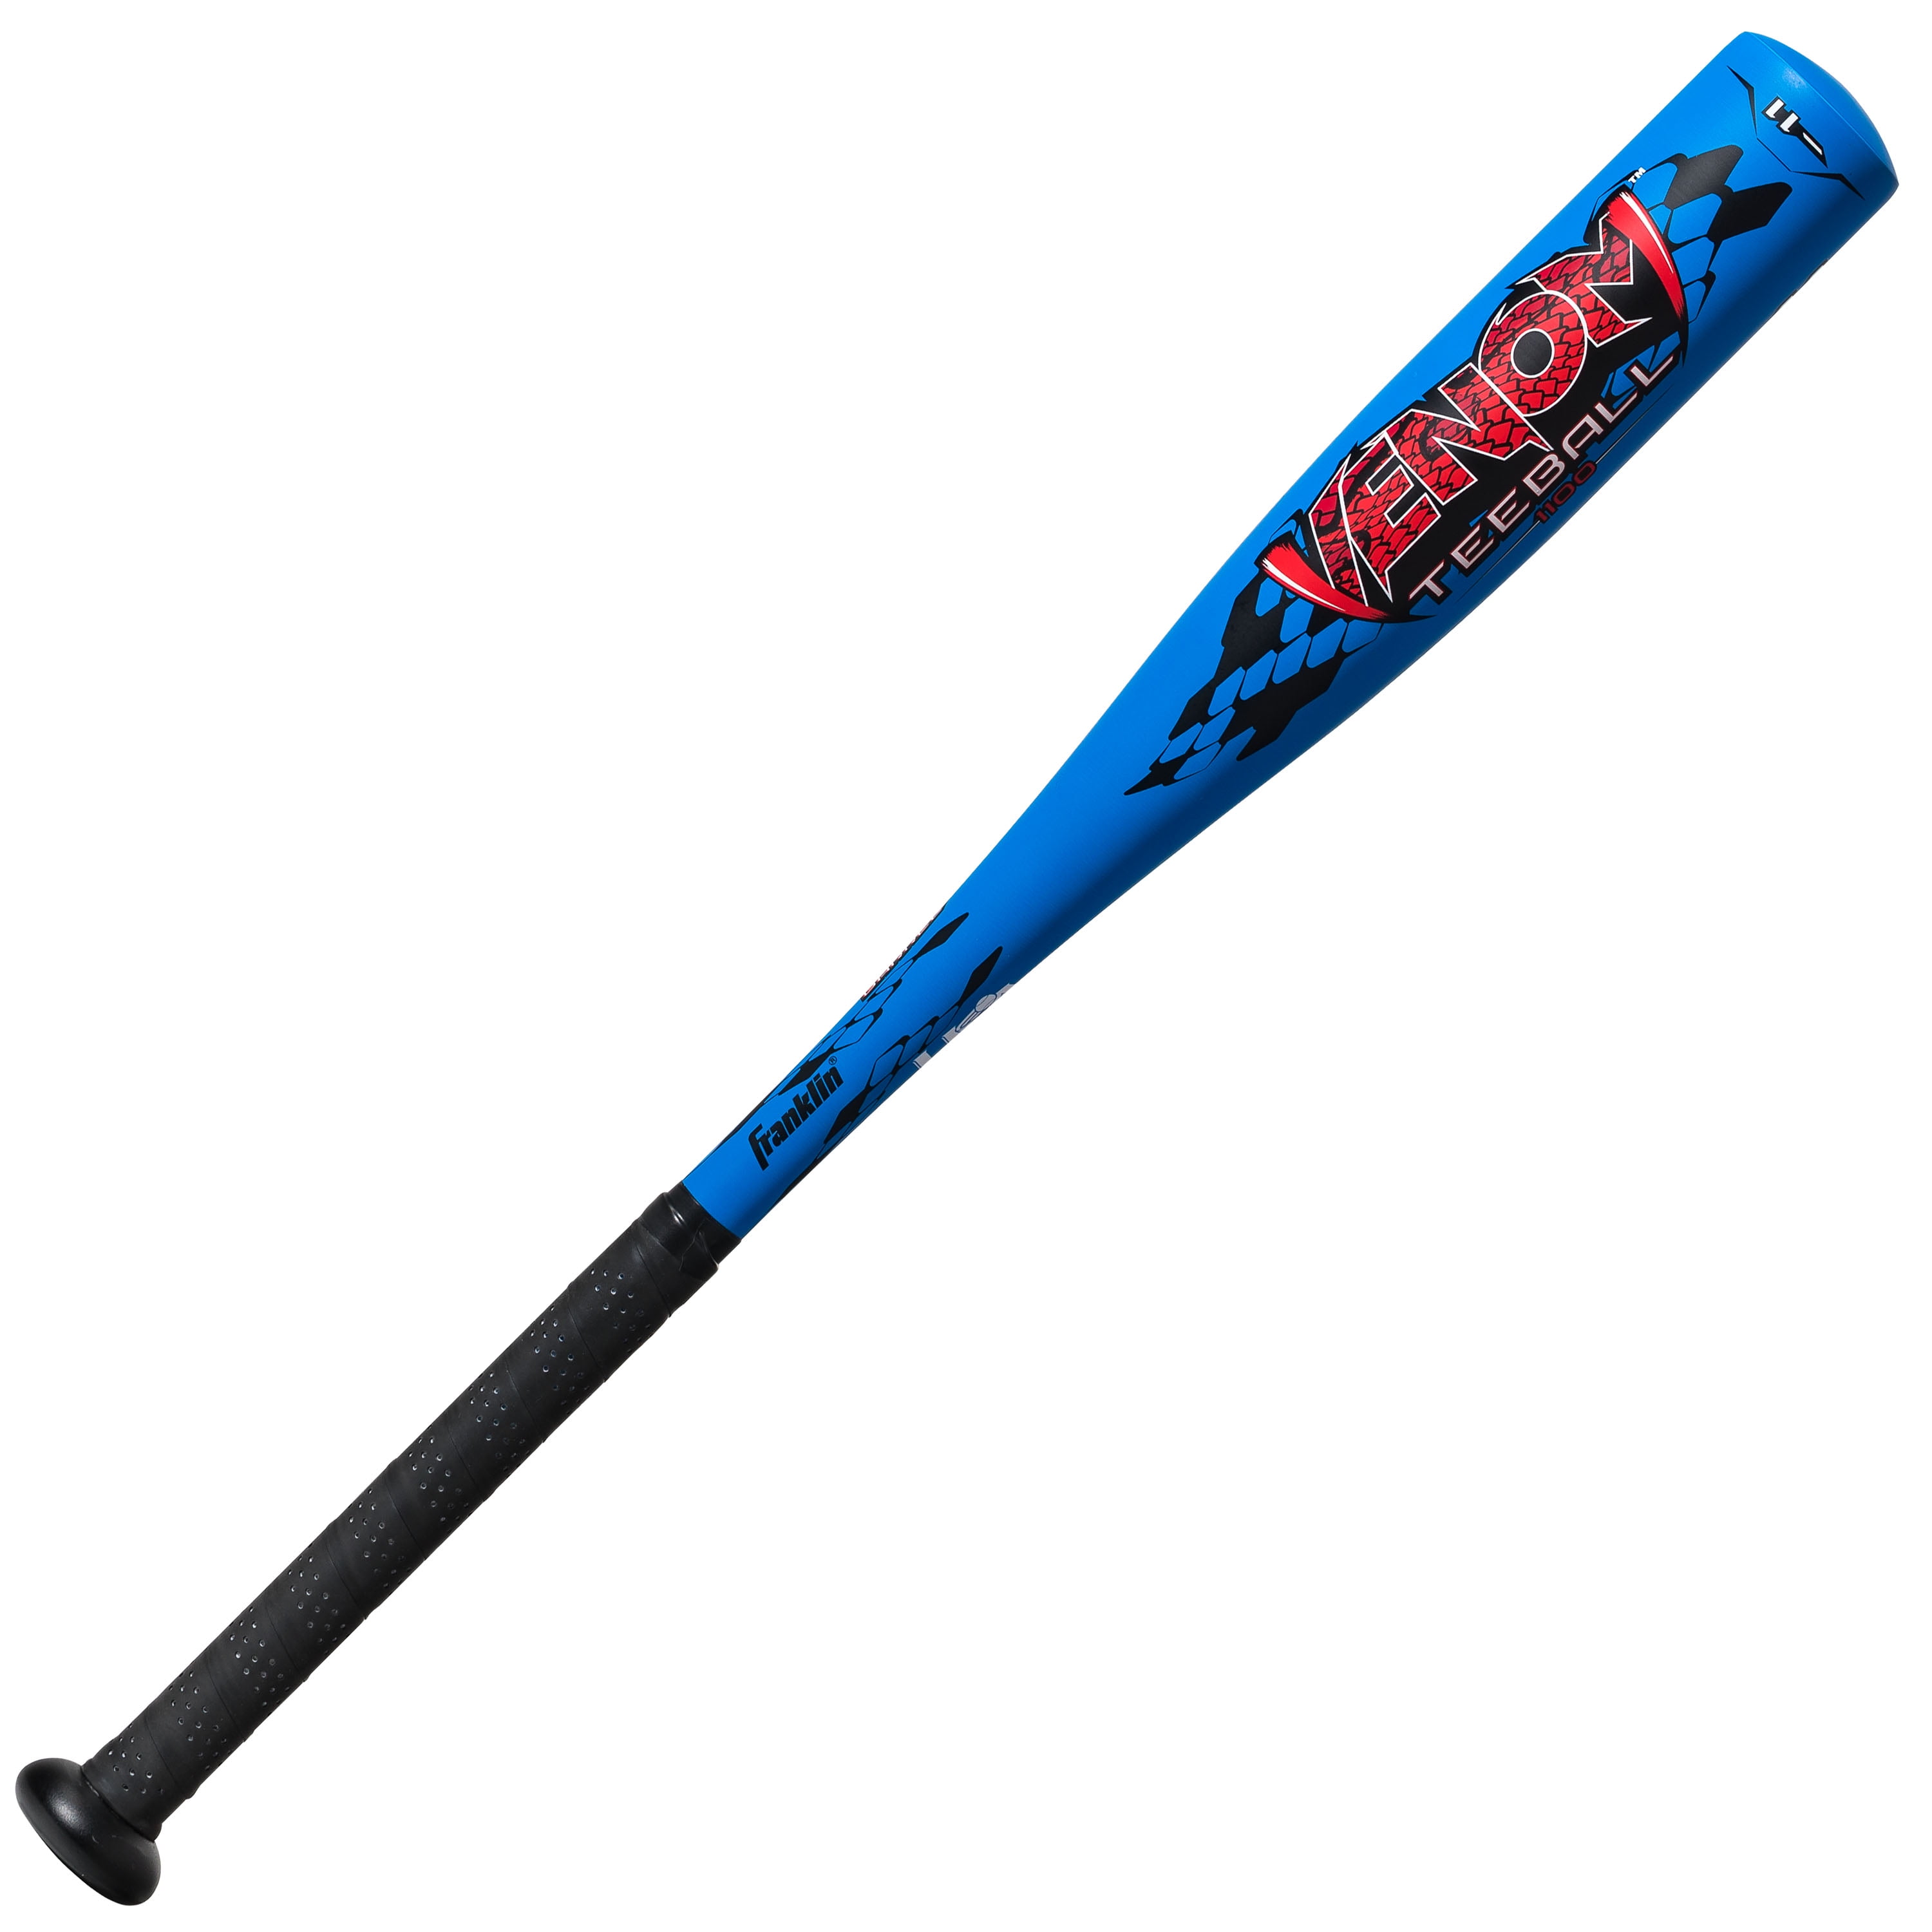 Easton 2019 Rival 2 1/4" BARREL USA Youth Baseball Bat 29" environ 538.63 g 19 oz -10 